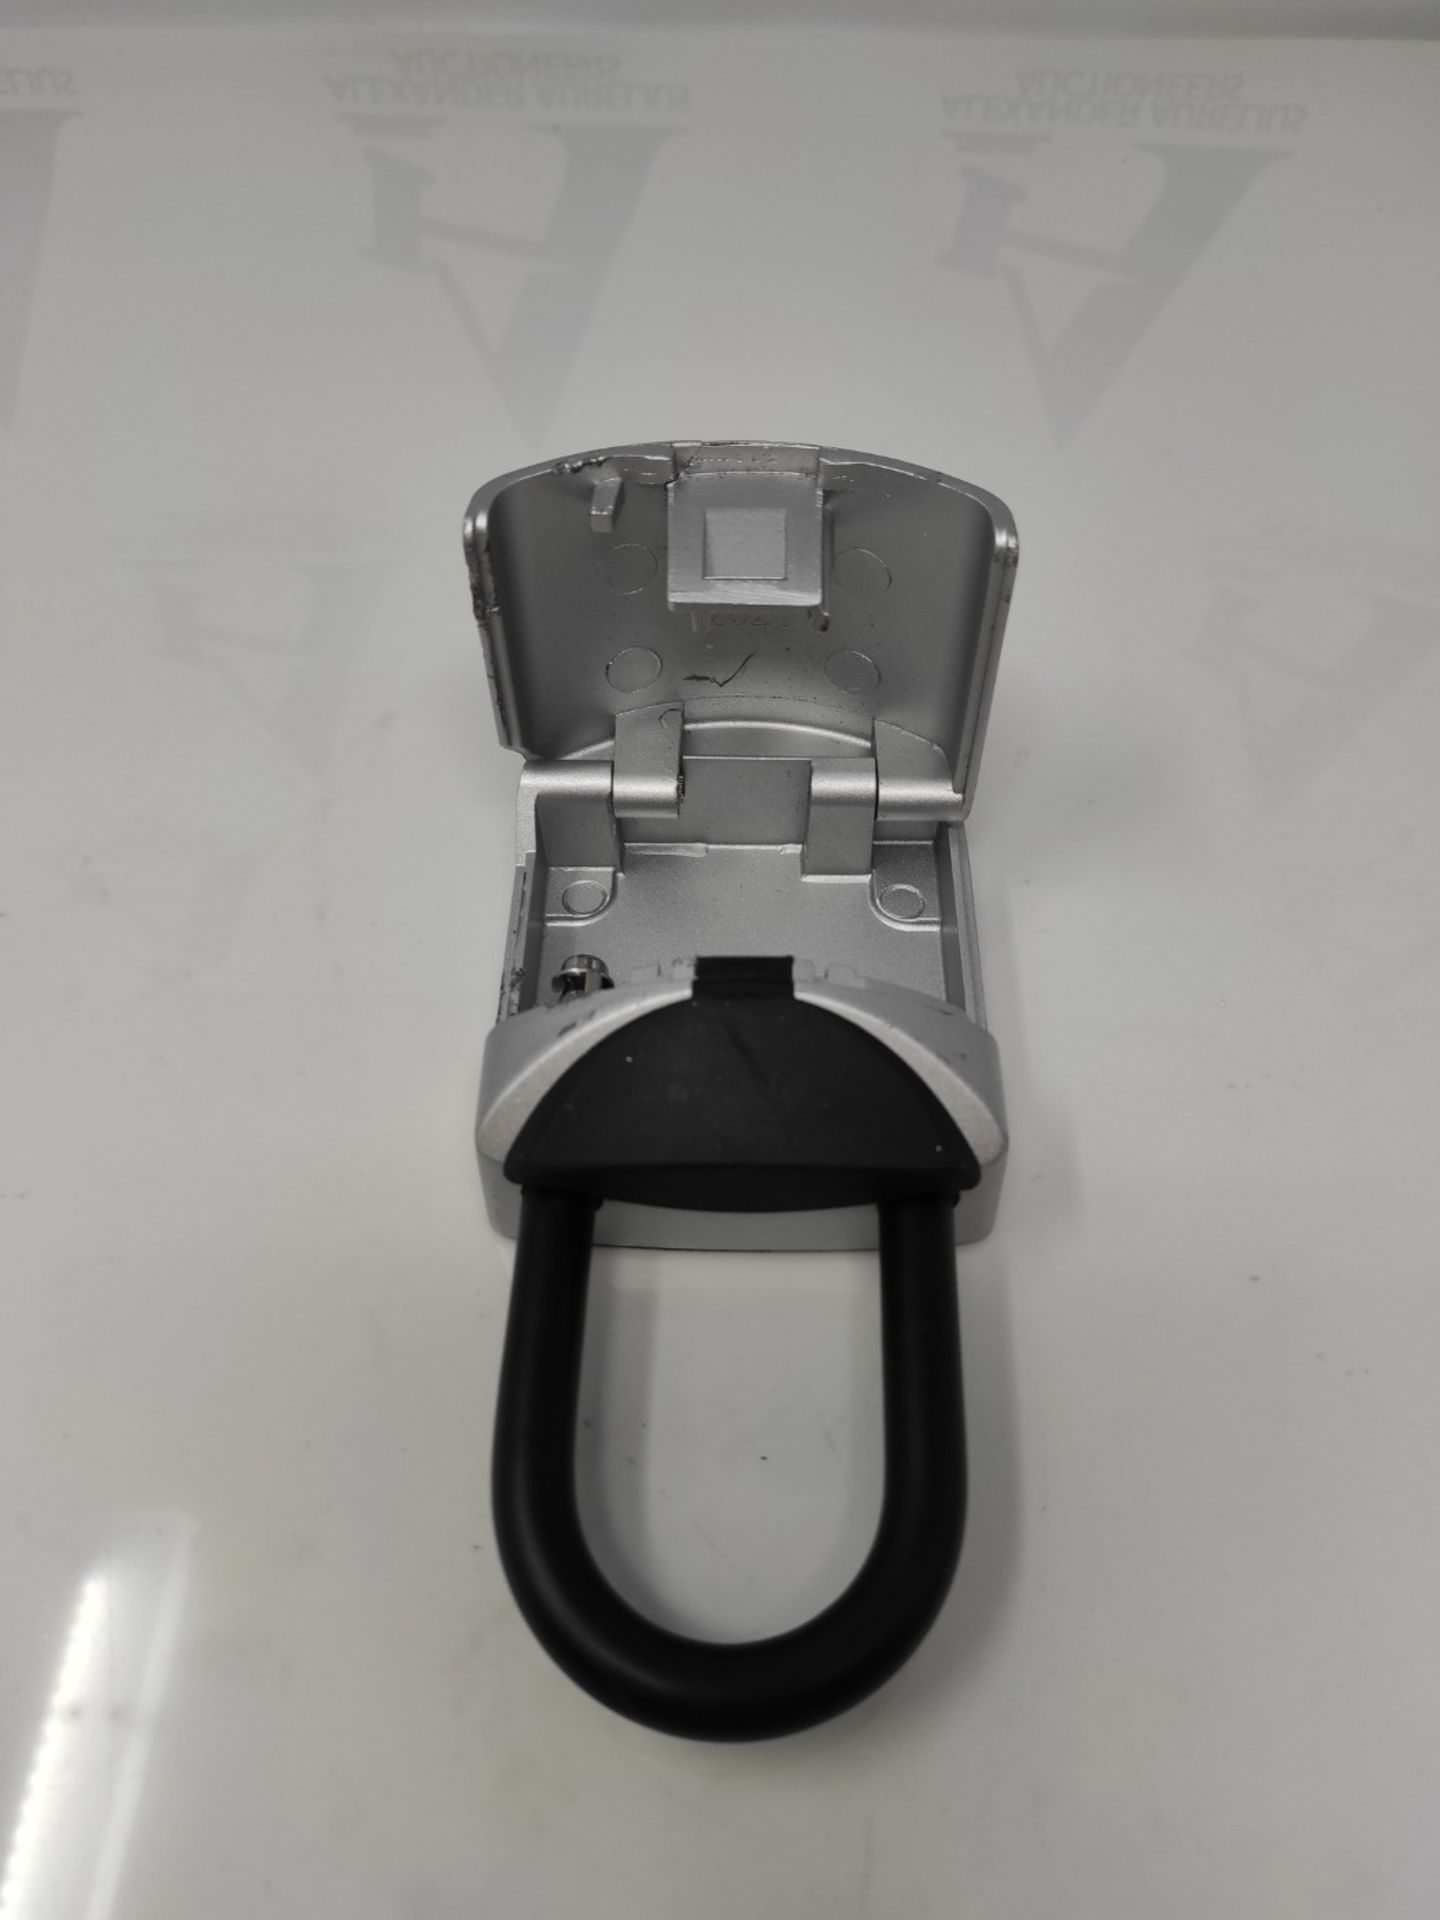 MASTER LOCK Mini Portable Key Safe [XS Size] [Outdoor]- 5406EURD - Key Lock Box with S - Image 2 of 3